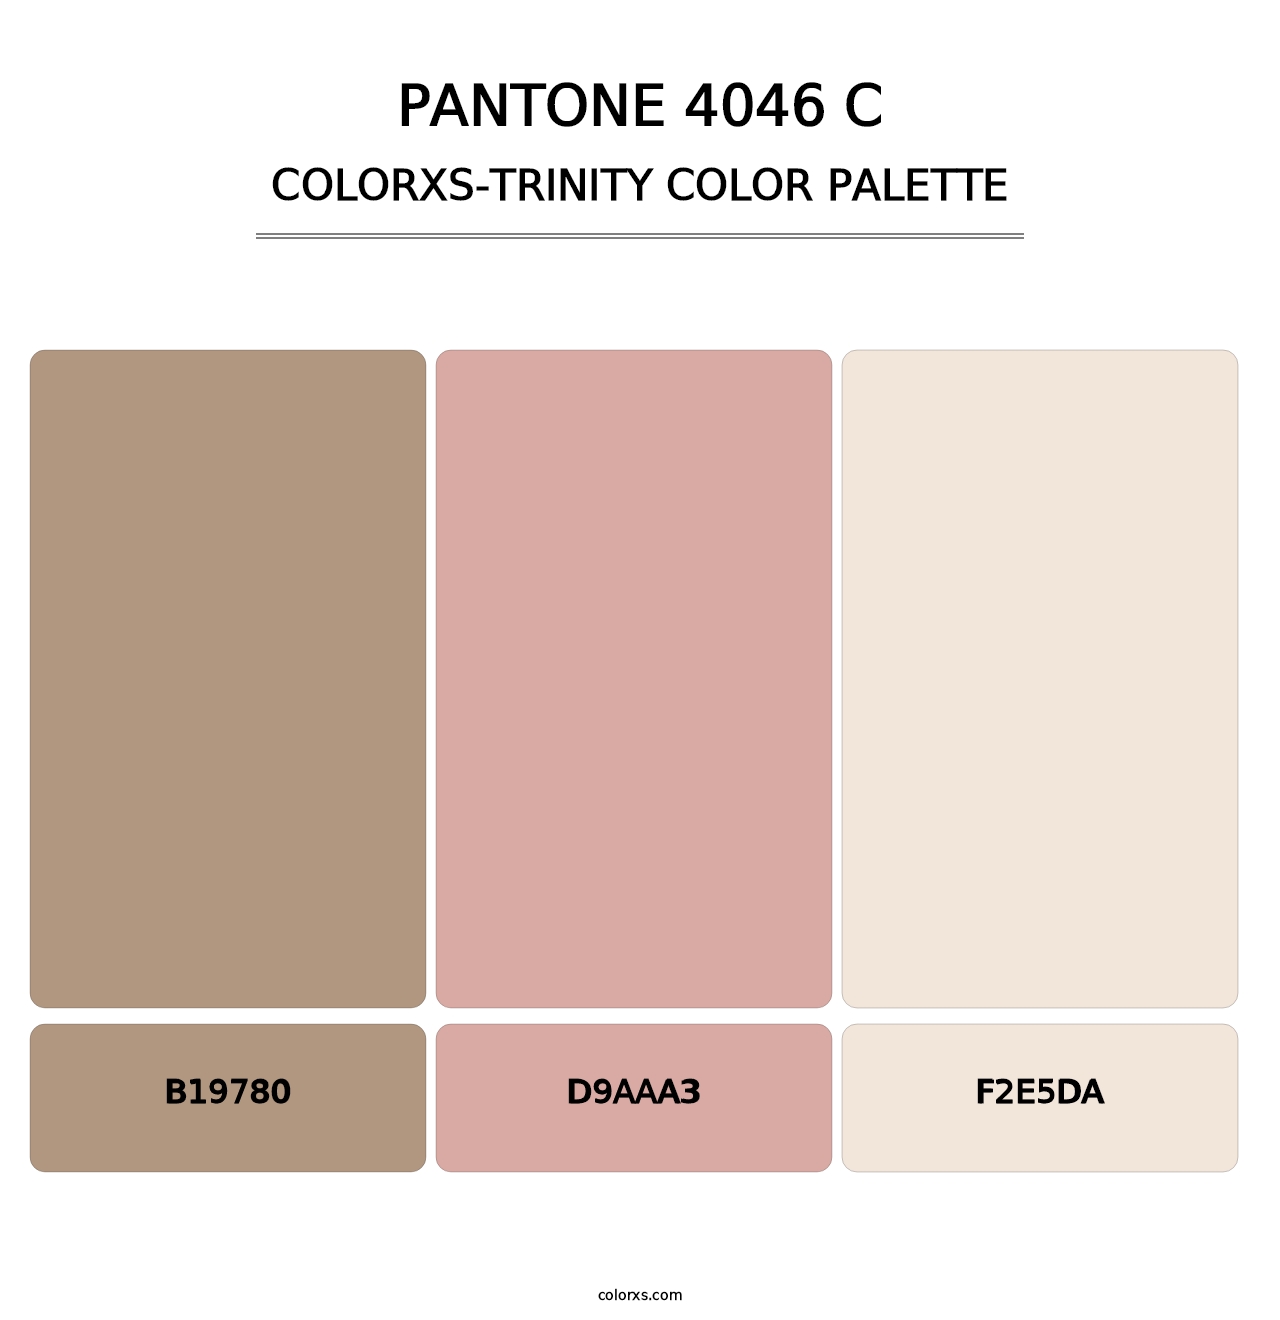 PANTONE 4046 C - Colorxs Trinity Palette